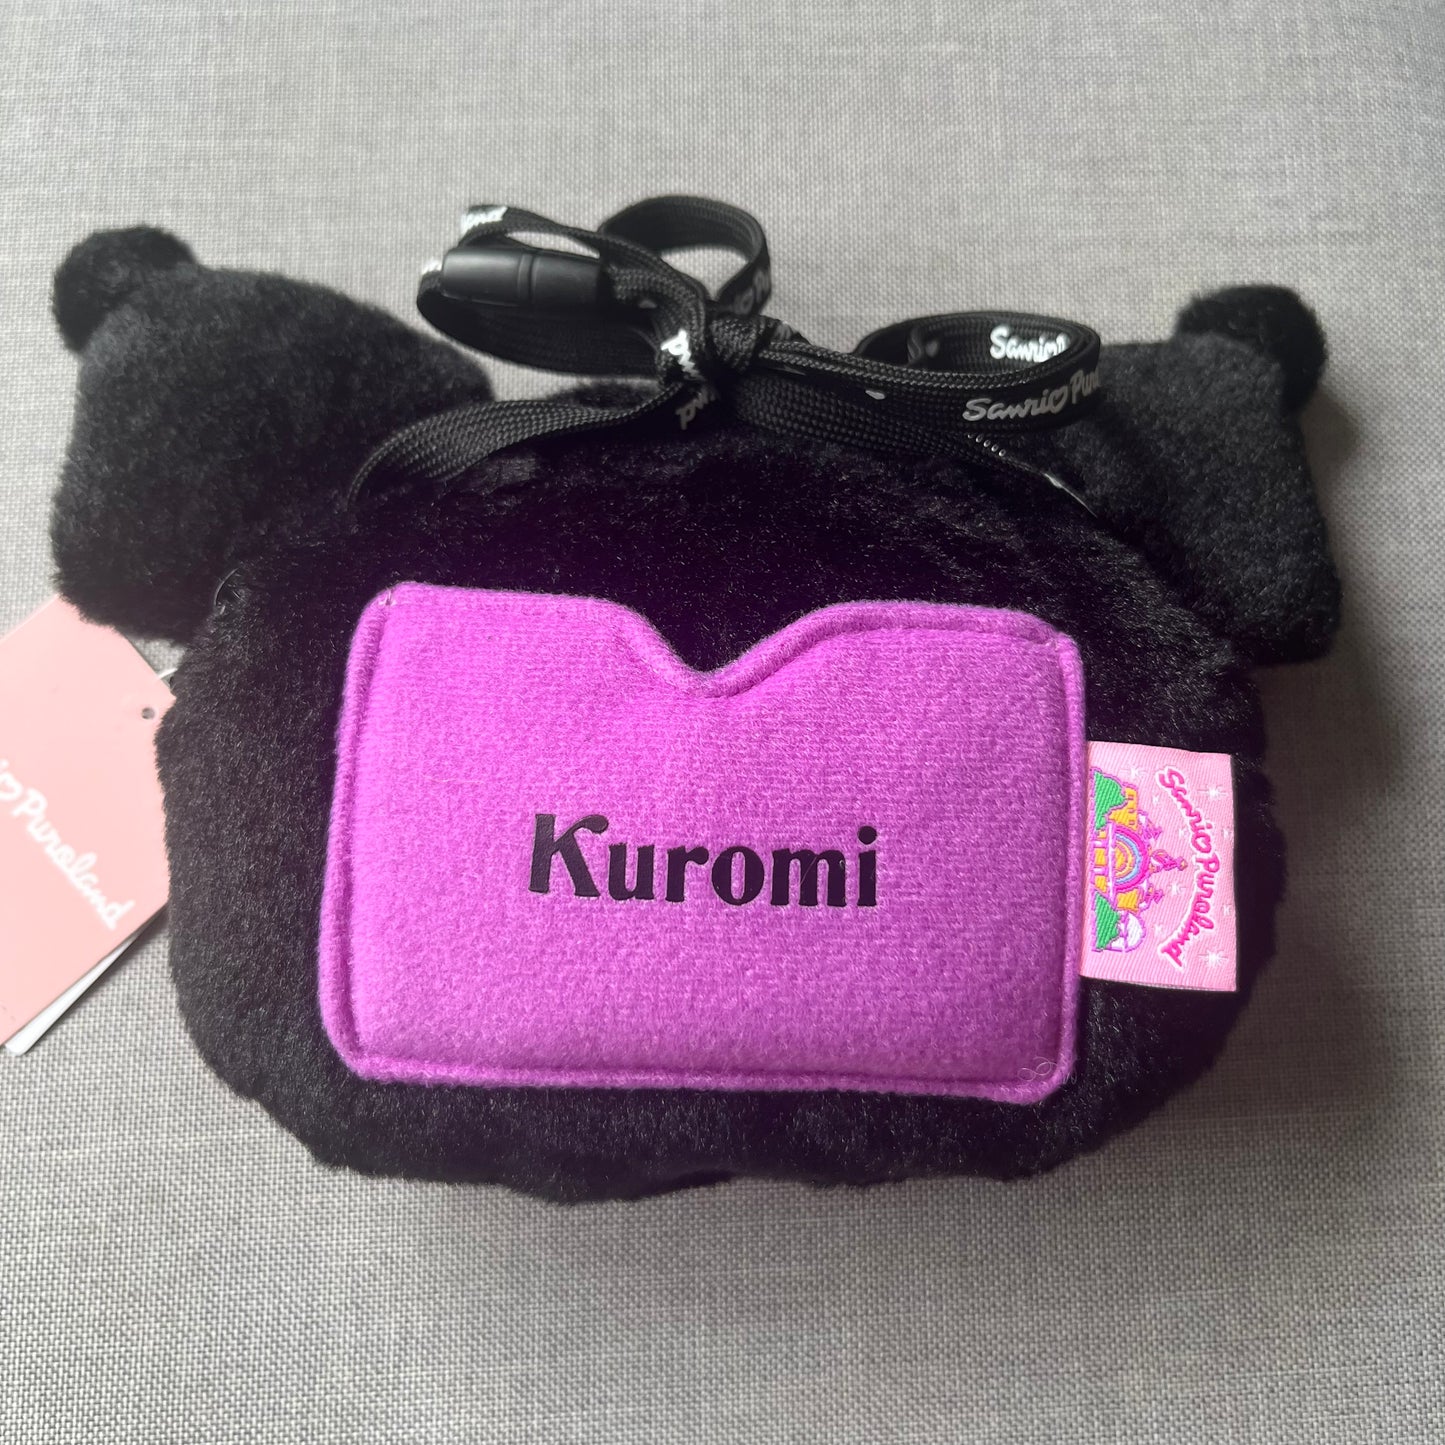 Kuromi Plush Bag/Purse